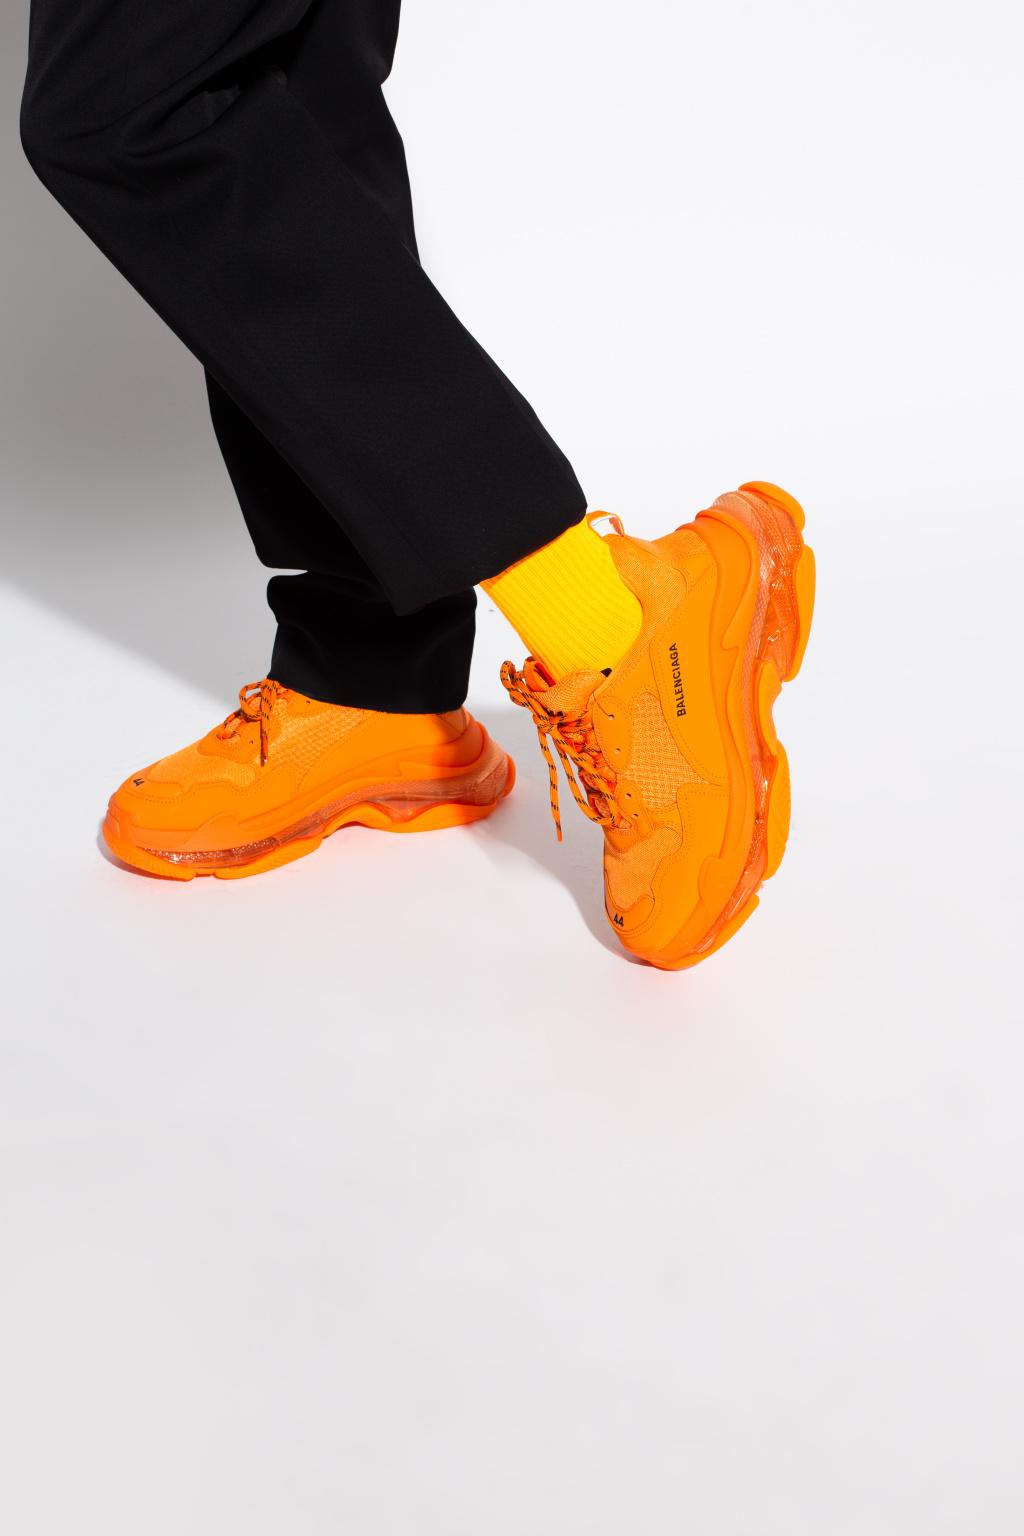 Balenciaga Track Sneaker White  Orange  END RU